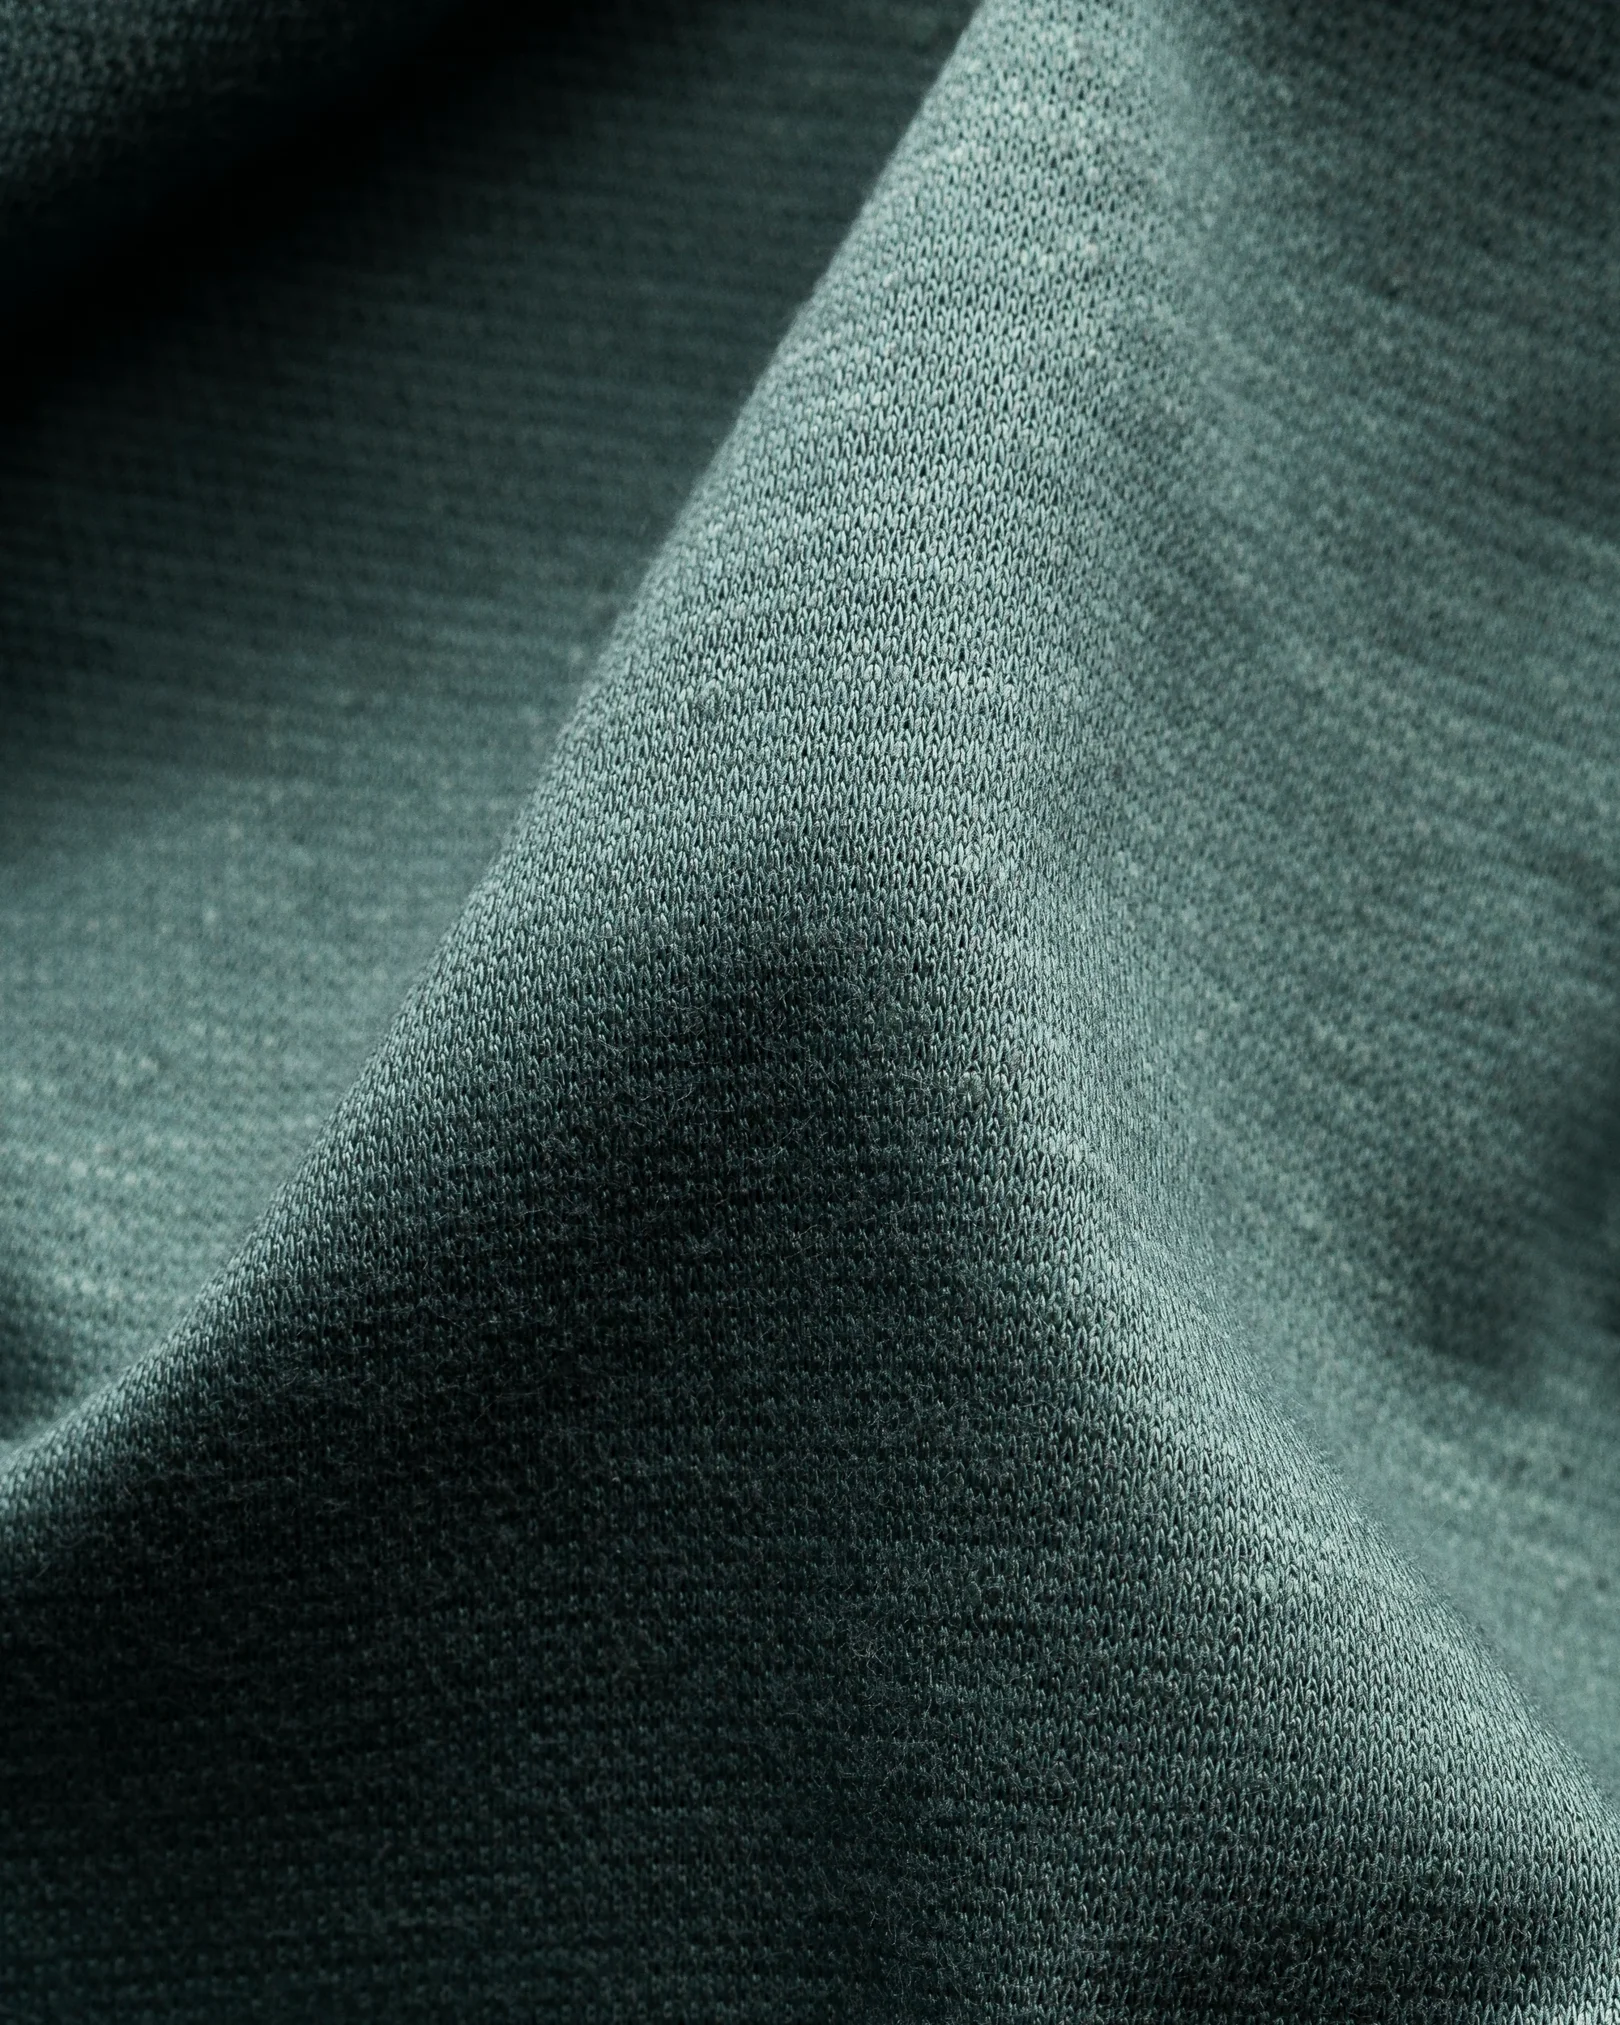 Eton - dark green pique open collar short sleeve